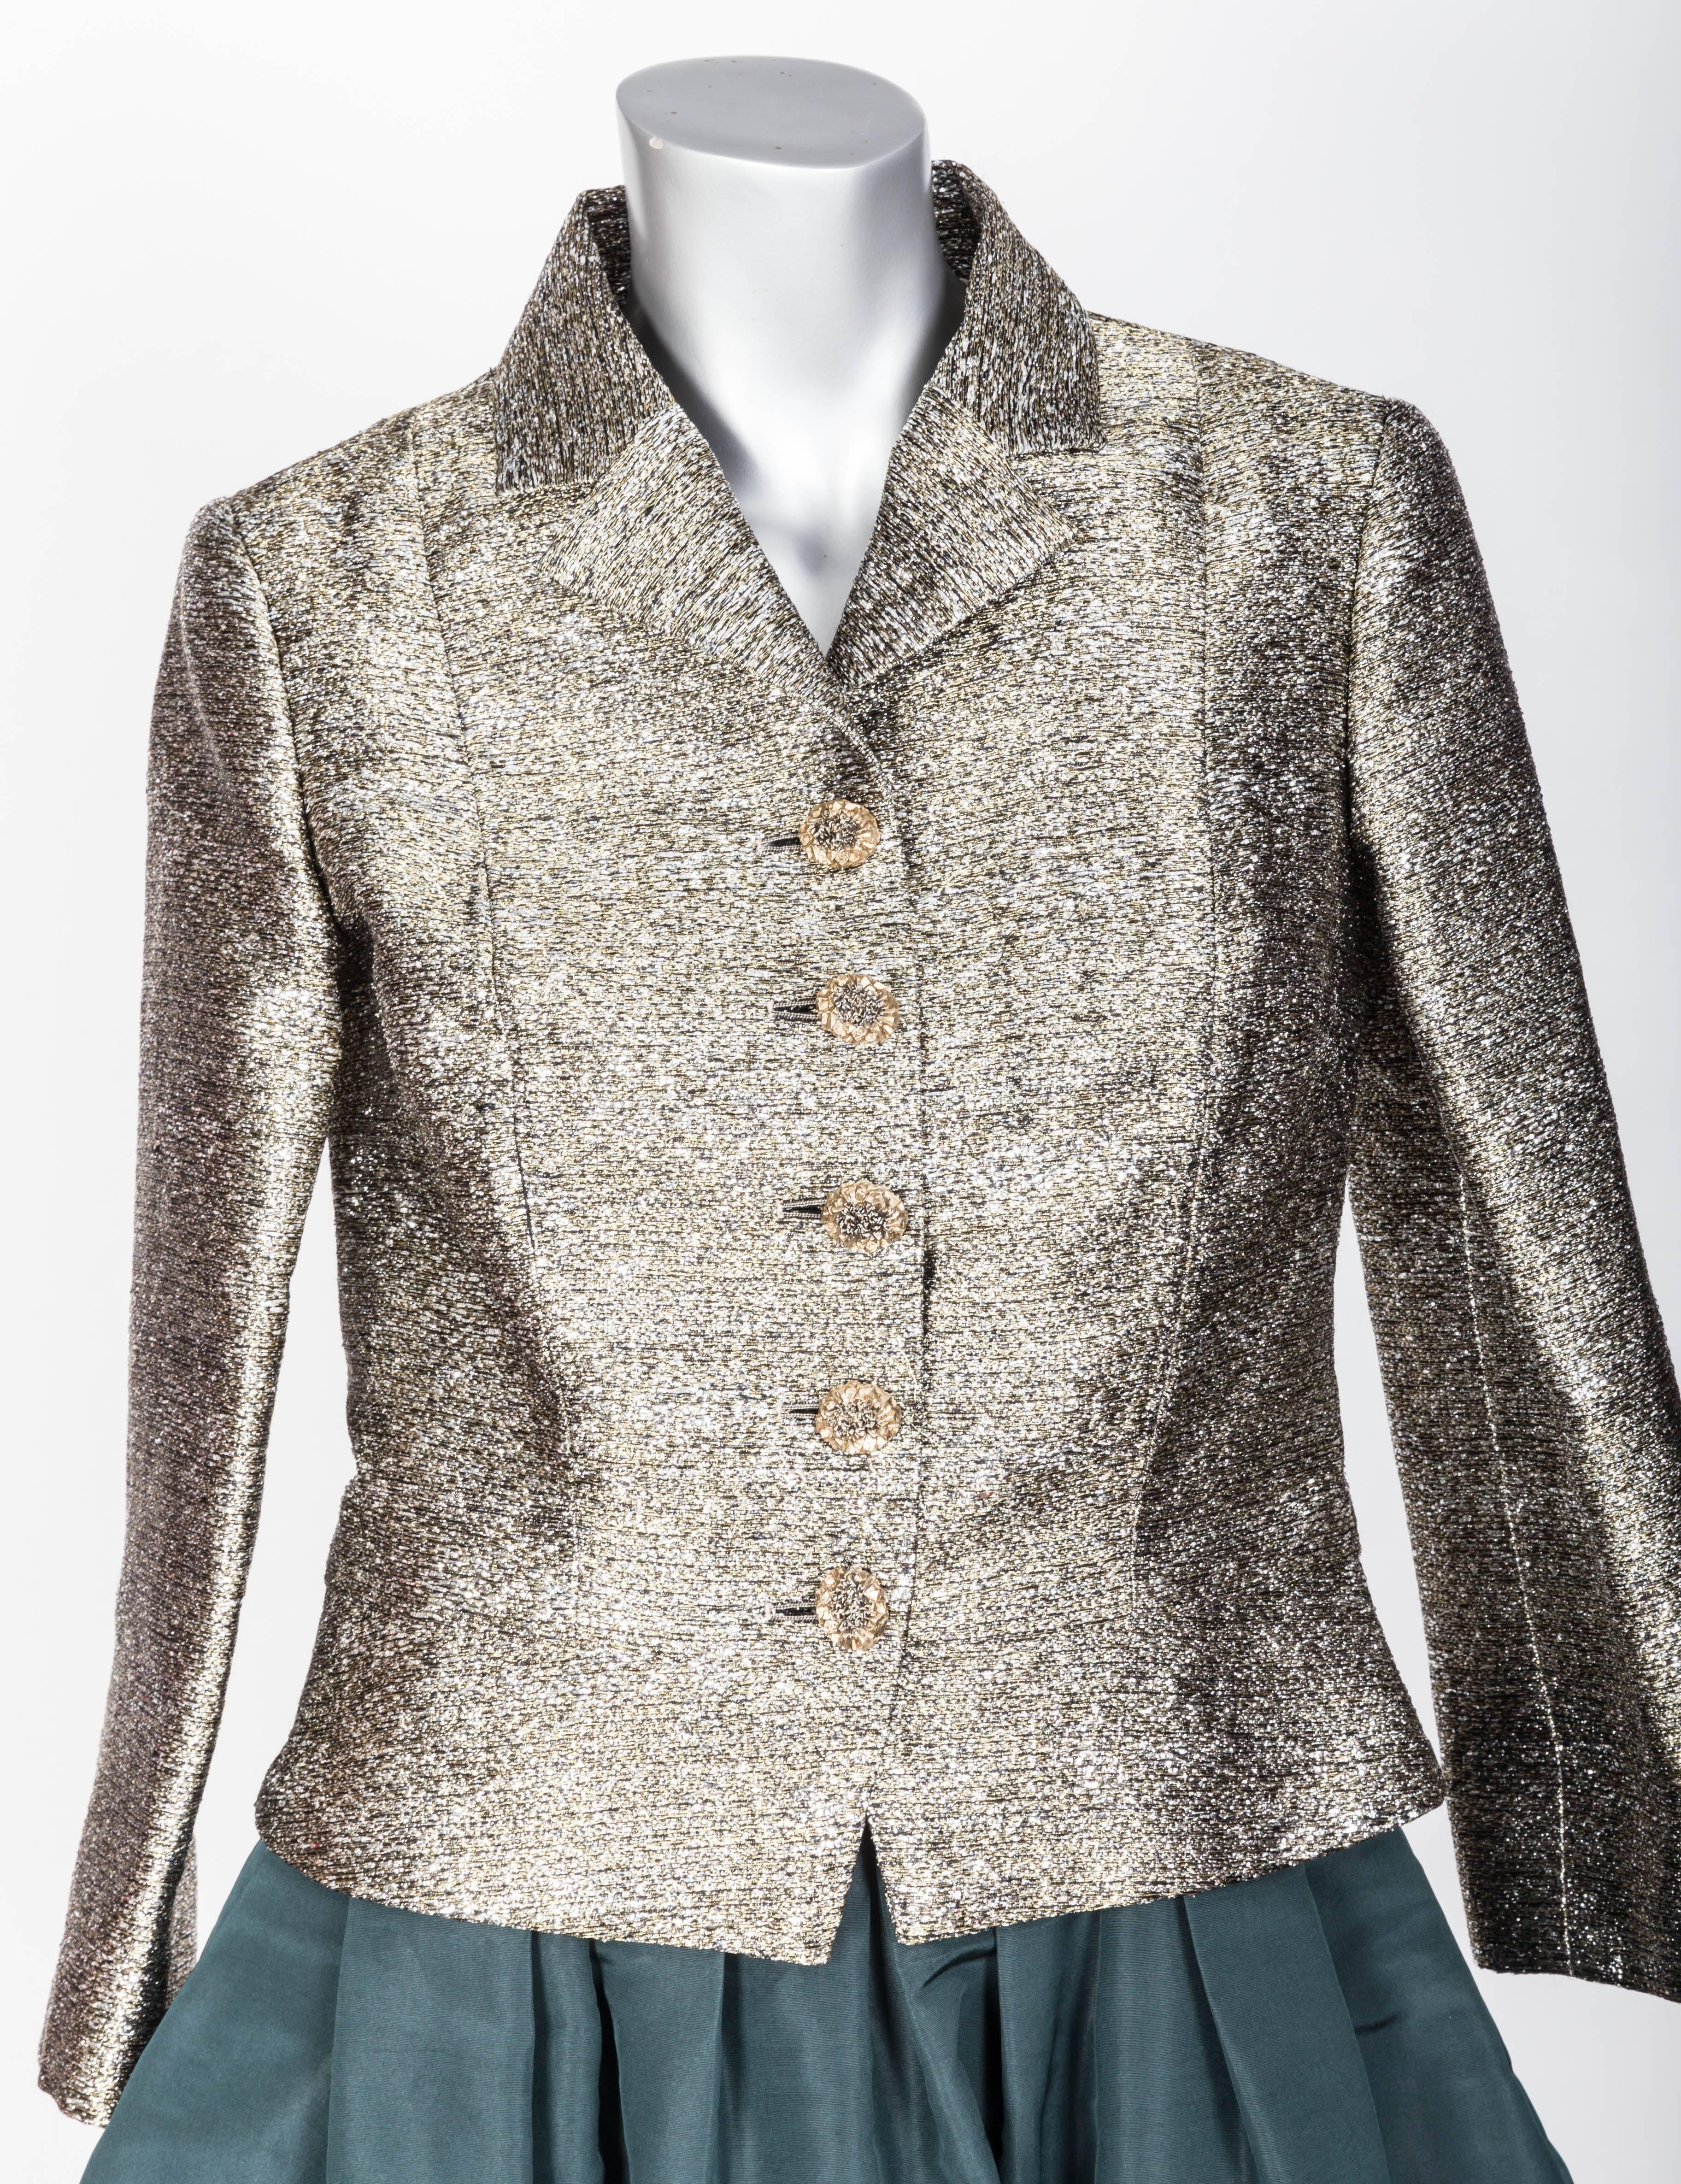 Chanel Silver Metallic Jacket and Pants Suit / Size 40 Jacket / Size 38 Pants 4